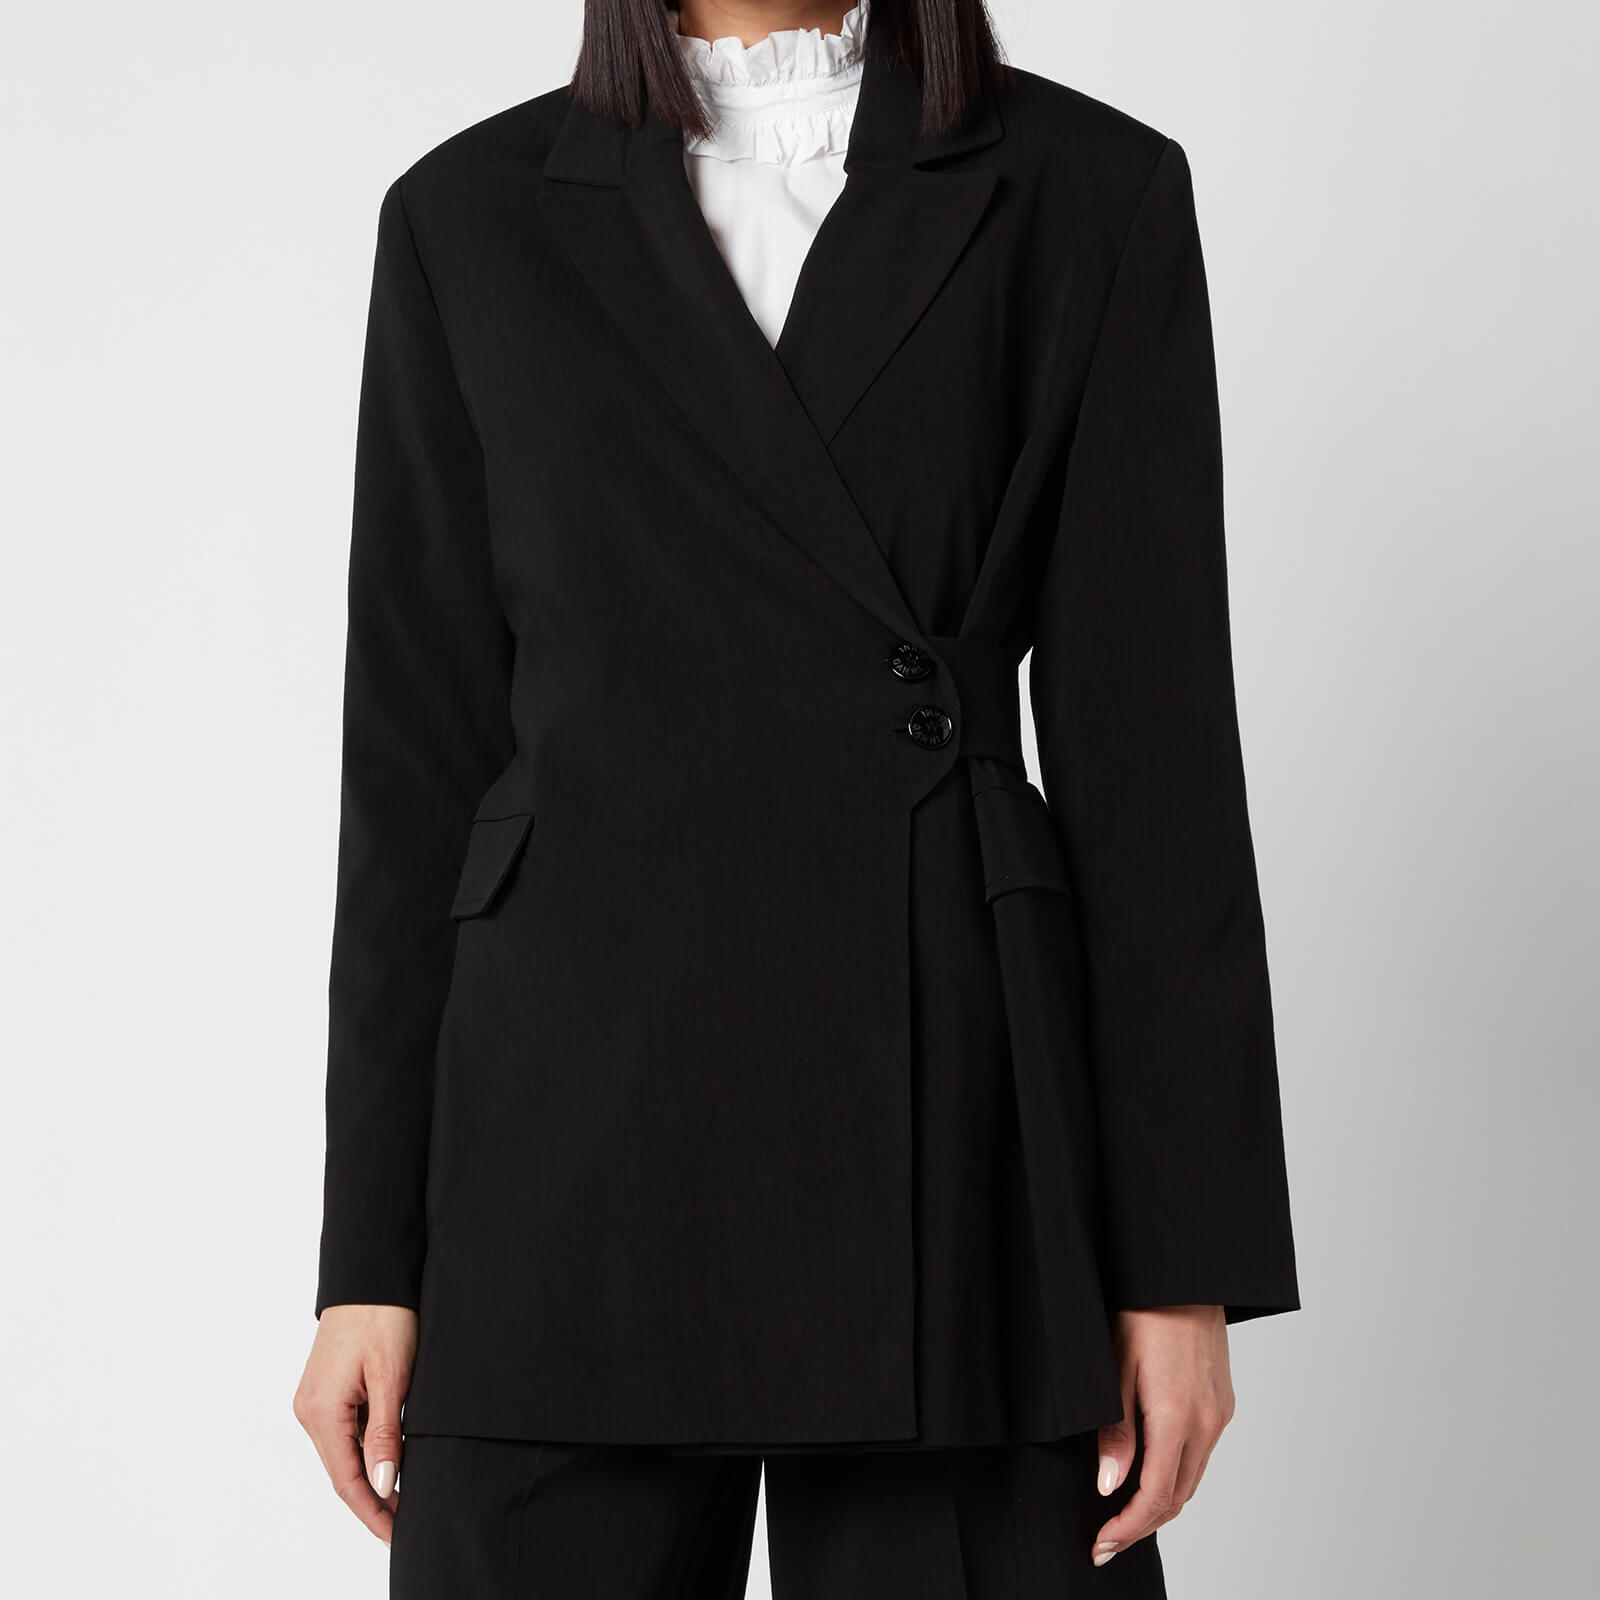 Ganni Women's Melange Suiting Jacket - Black - EU 38/ UK 10